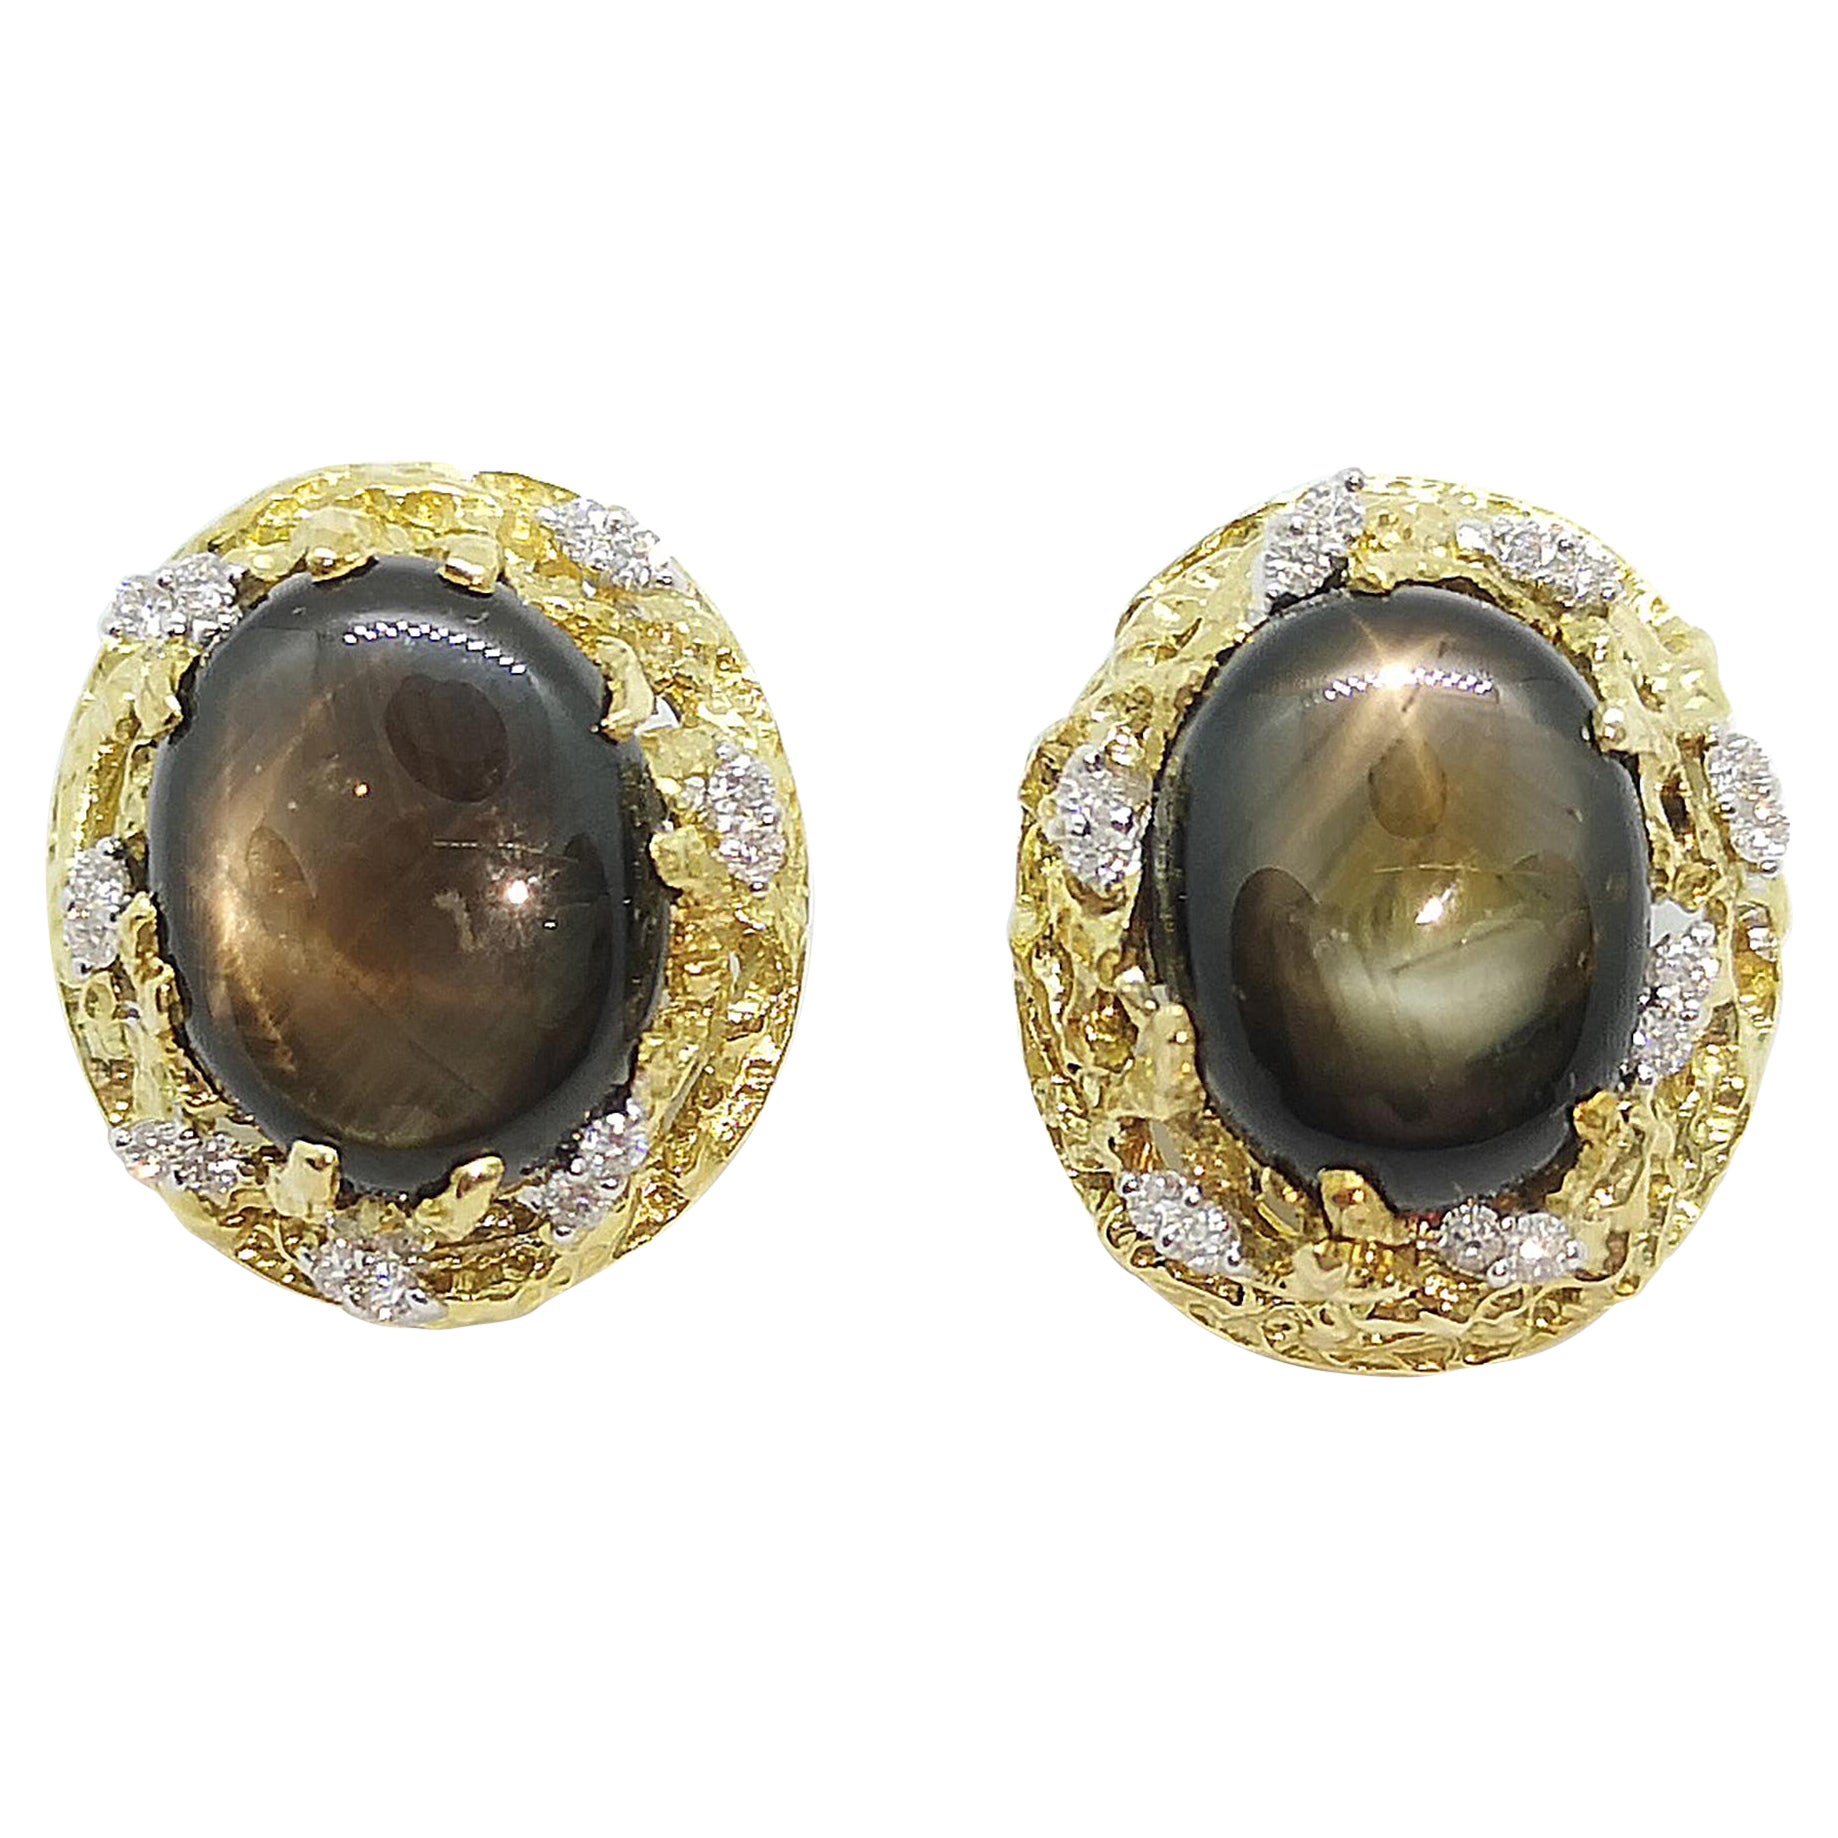 Black Star Sapphire with Diamond  Earrings set in 18 Karat Gold Settings